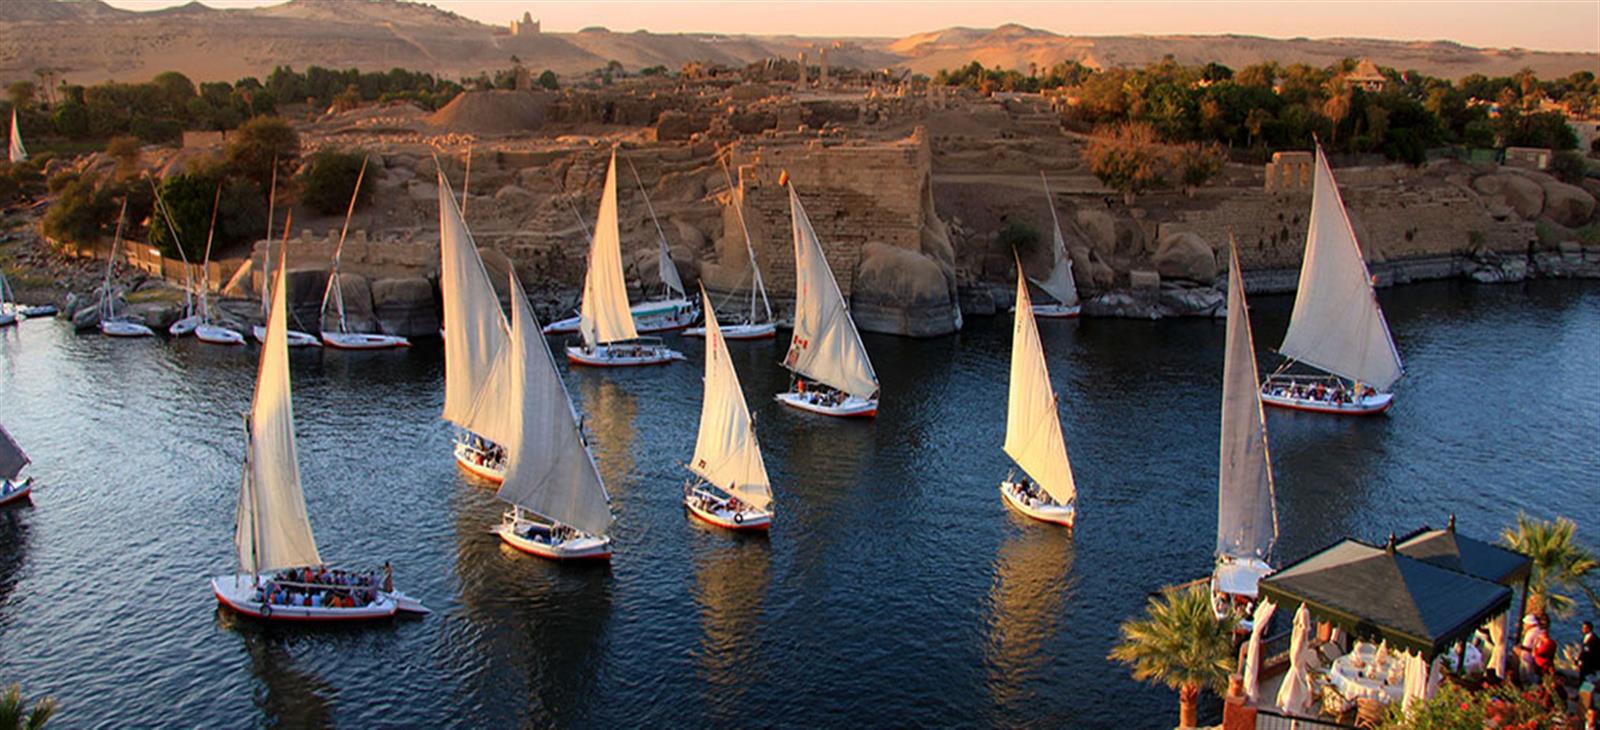 21 days tour all over Egypt